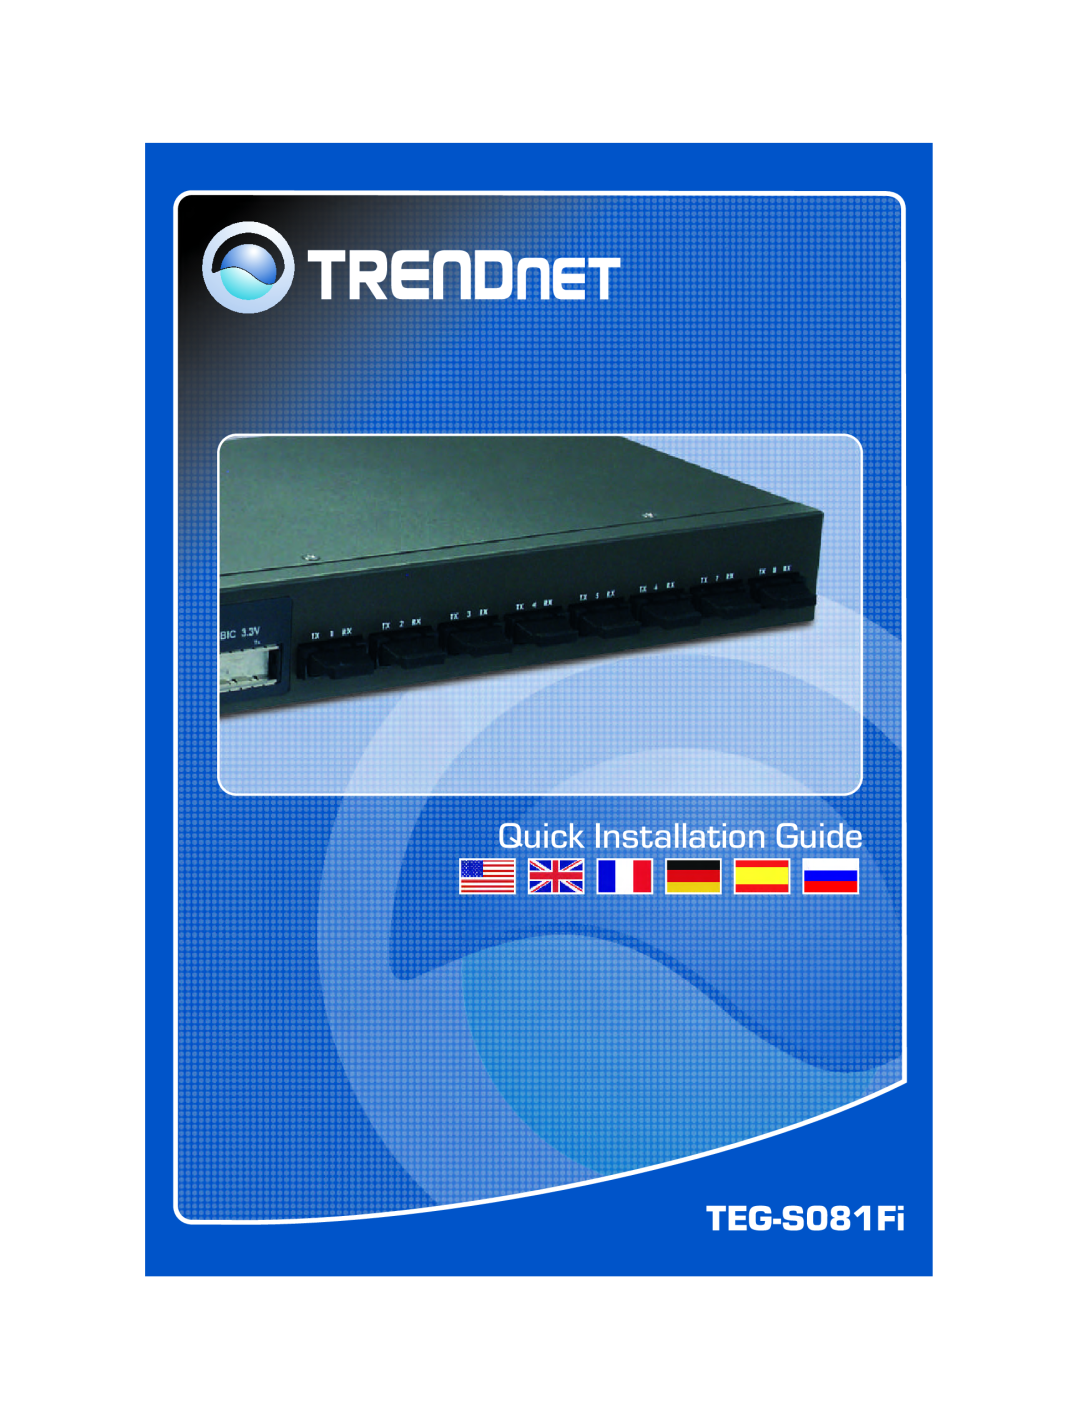 TRENDnet TEG-S081FI manual Quick Installation Guide, TEG-S081Fi 